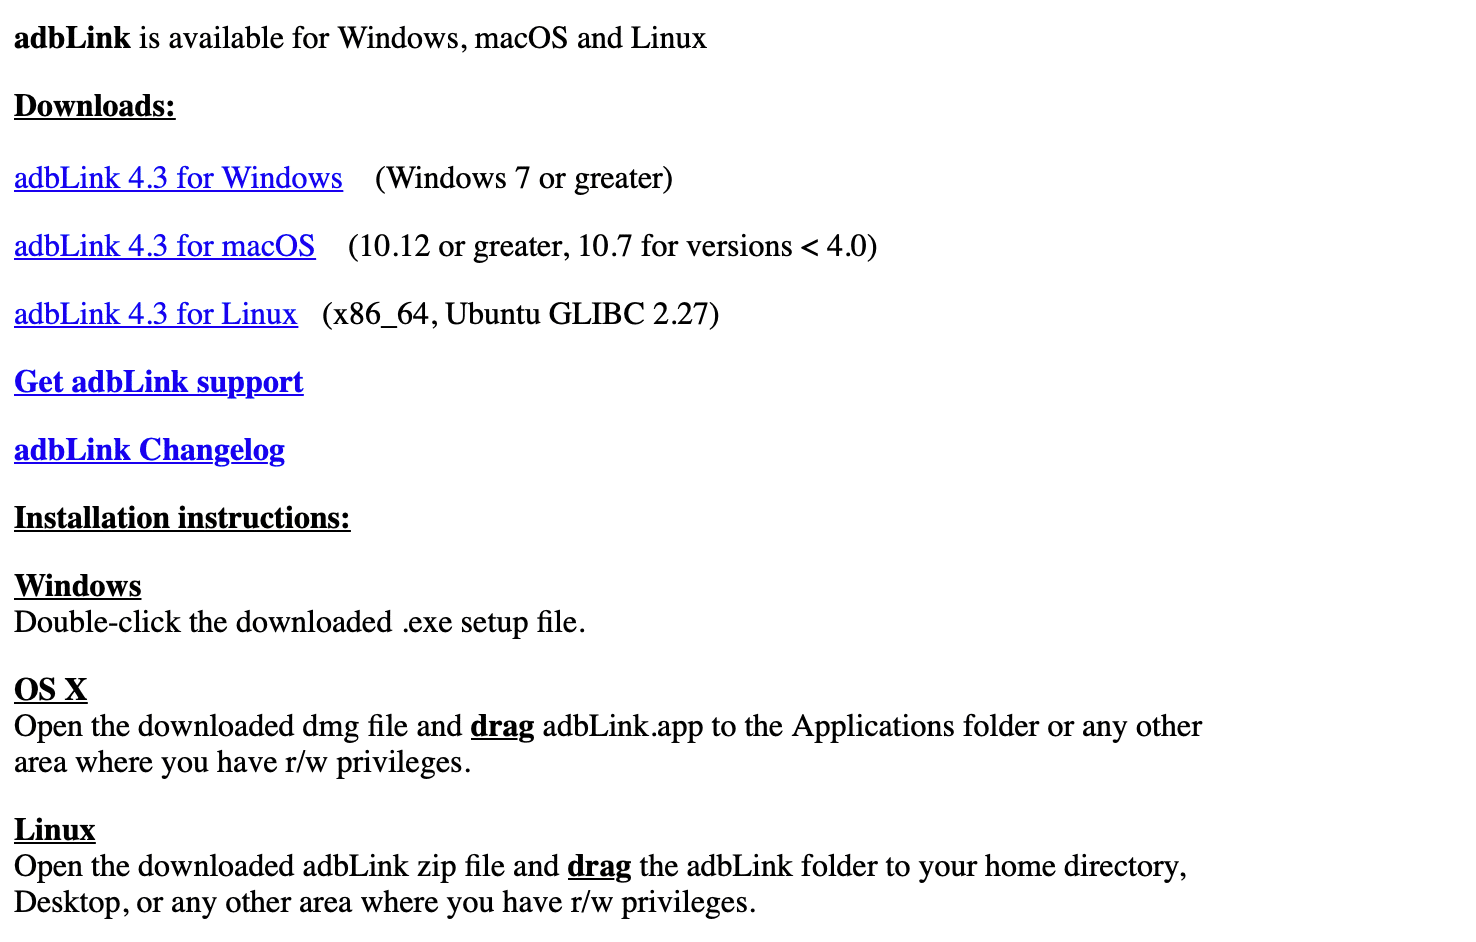 adblink 3.0 for windows